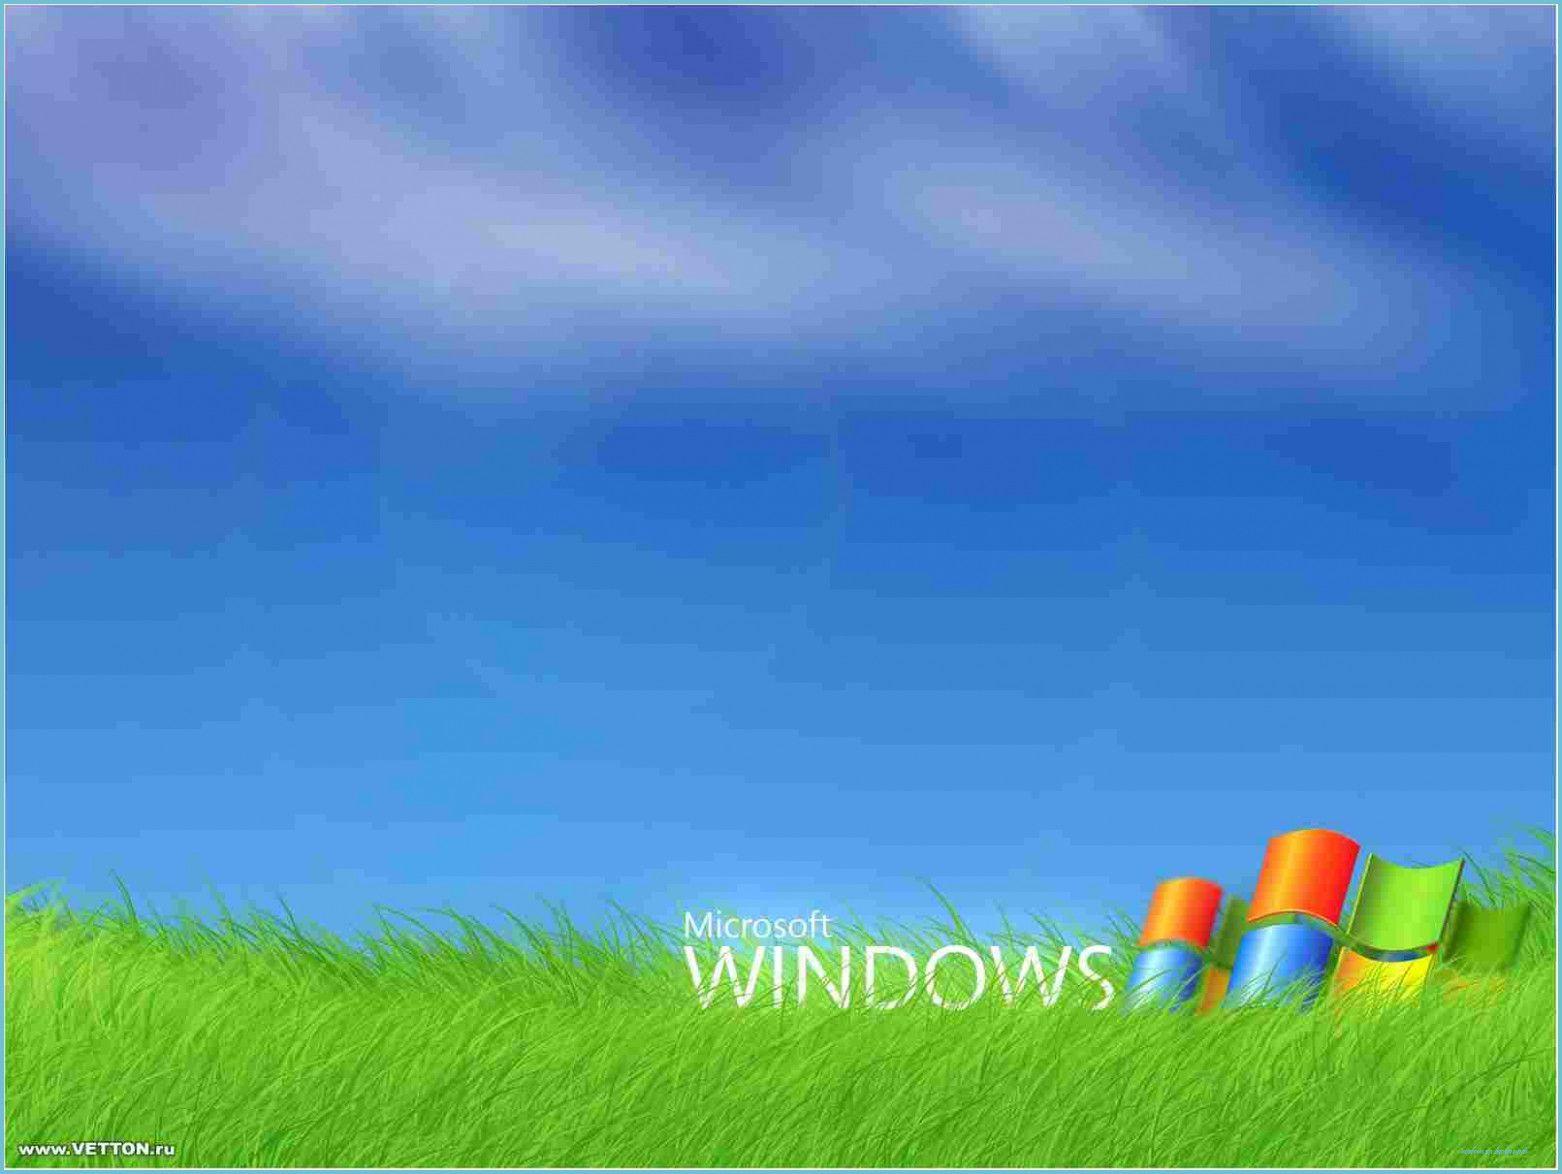 Windows XP Logo Wallpapers - Top Free Windows XP Logo Backgrounds ...